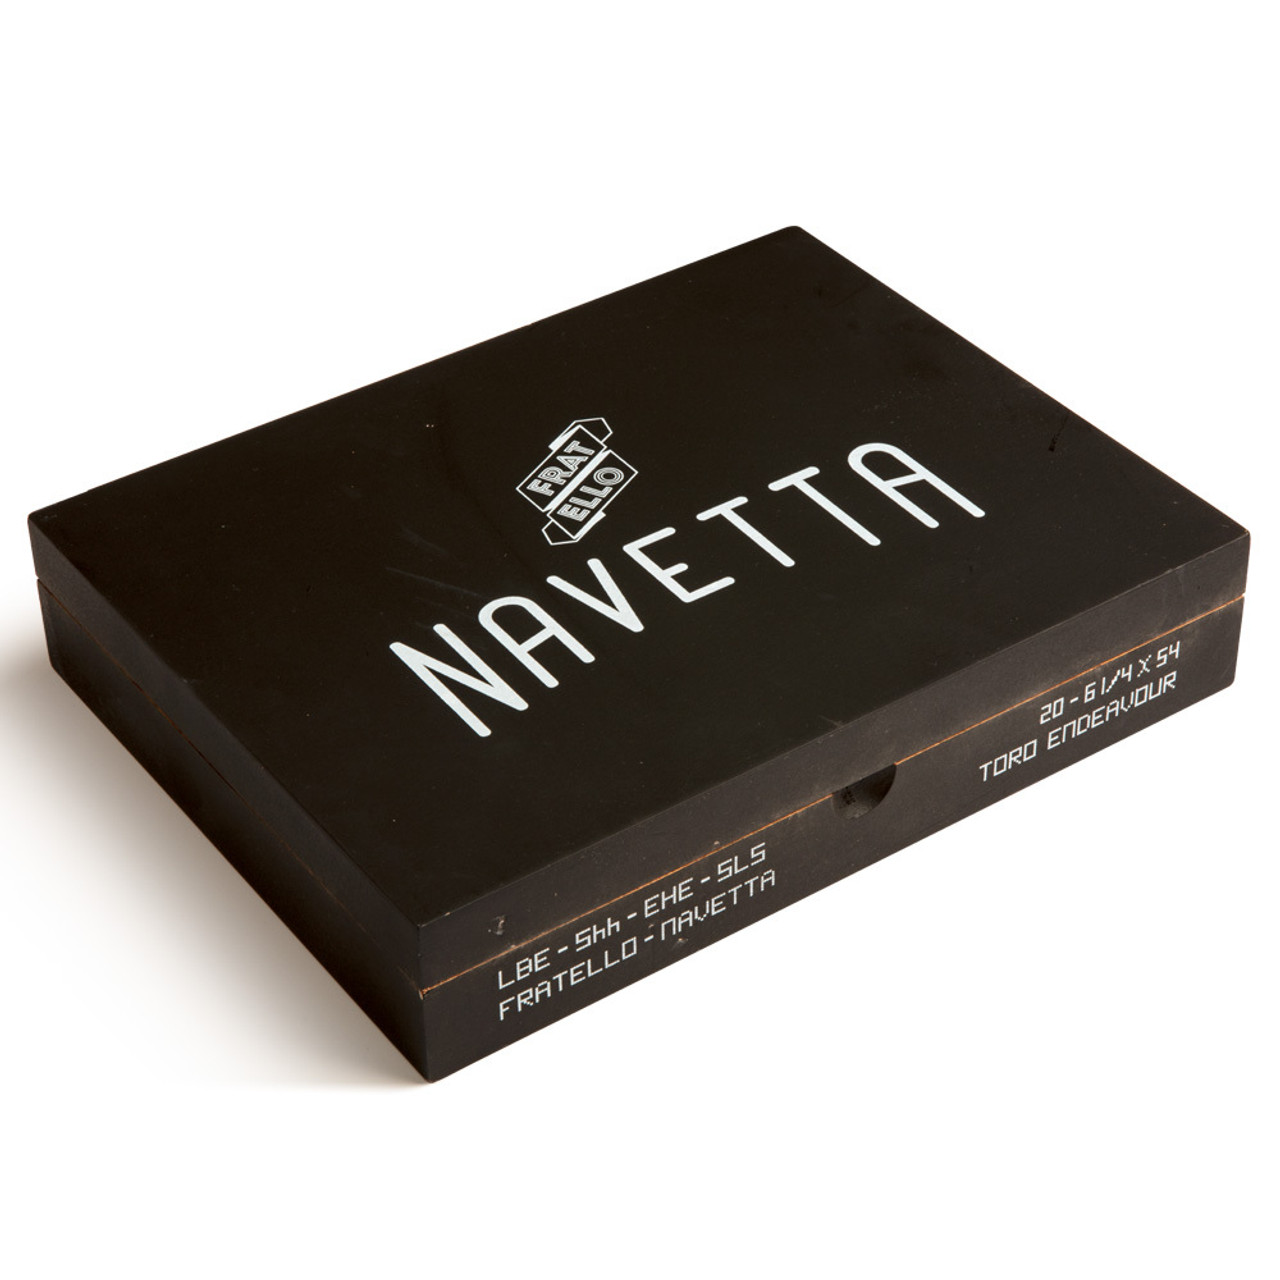 Fratello Navetta Toro Endeaver Cigars - 6.25 x 54 (Box of 20) *Box